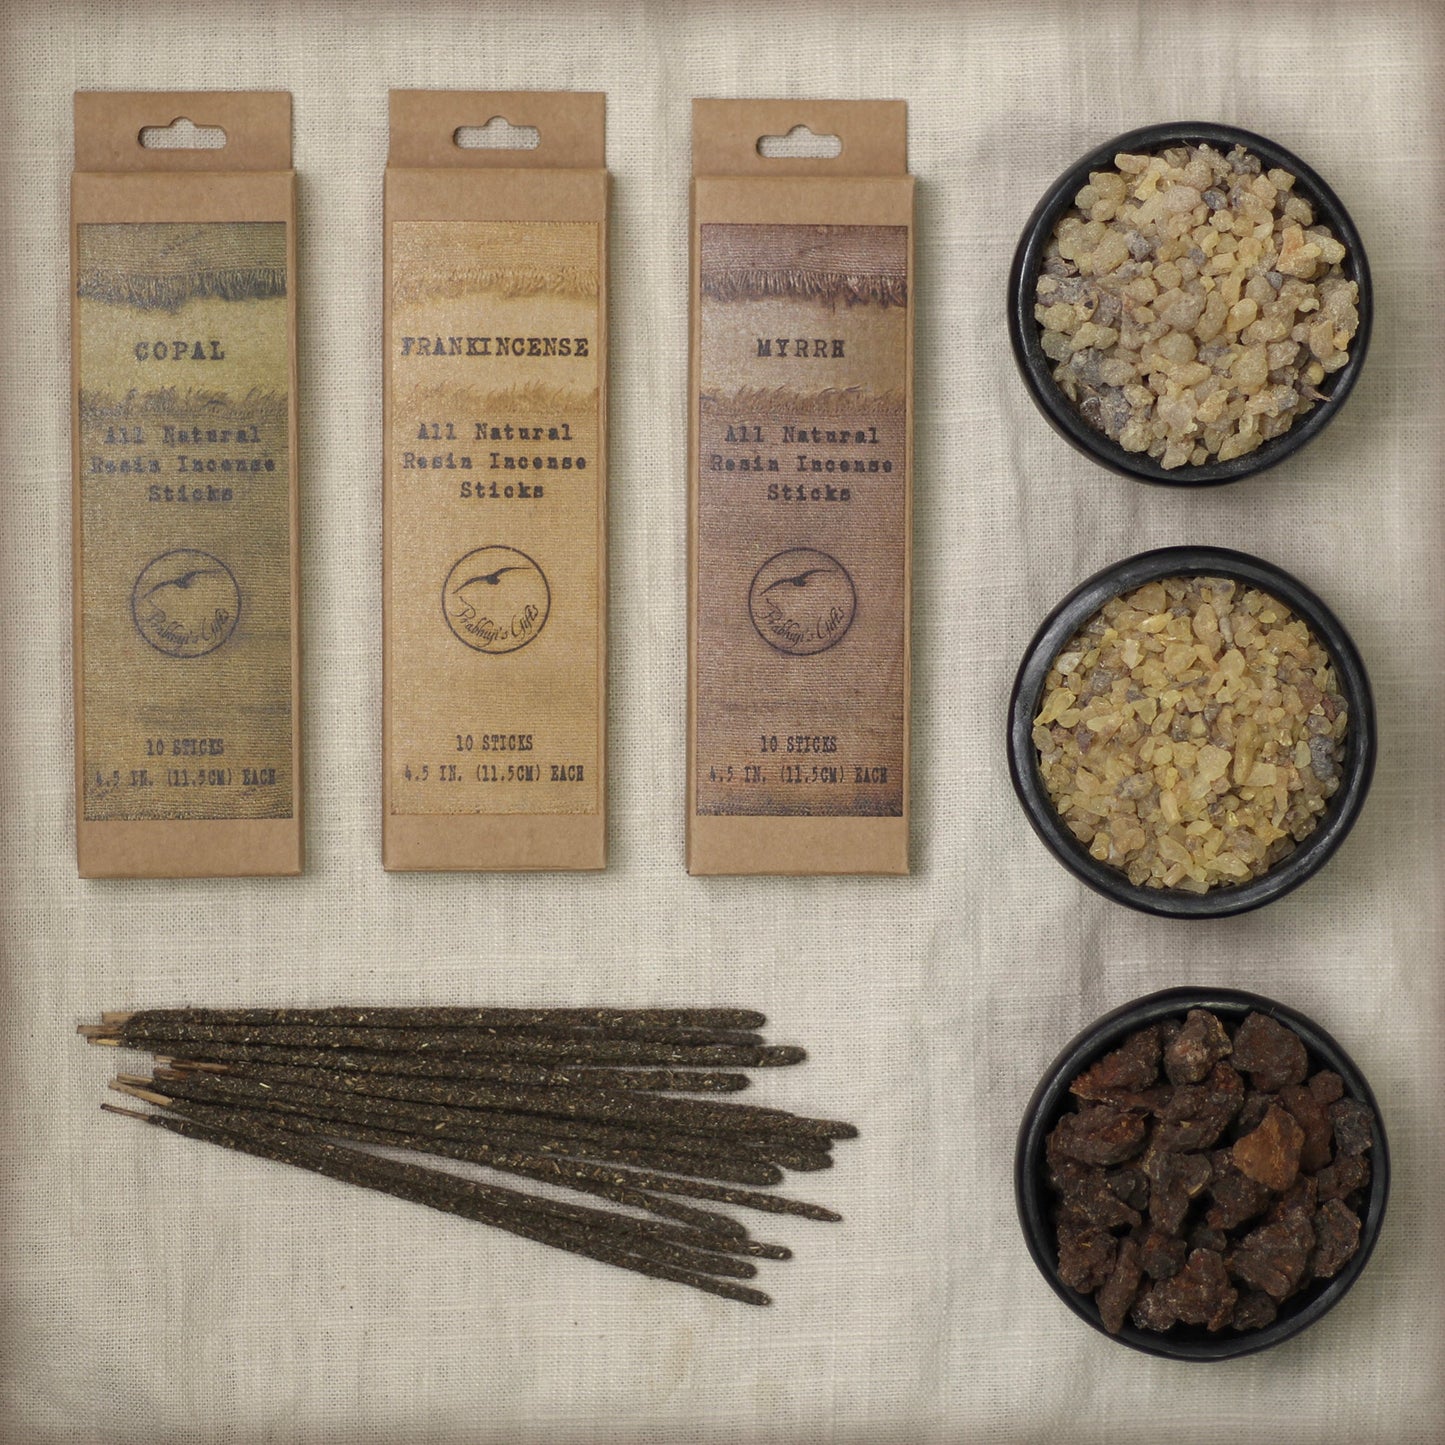 Smudging Incense - Myrrh - Natural Resin Incense sticks - Tree Spirit Wellness